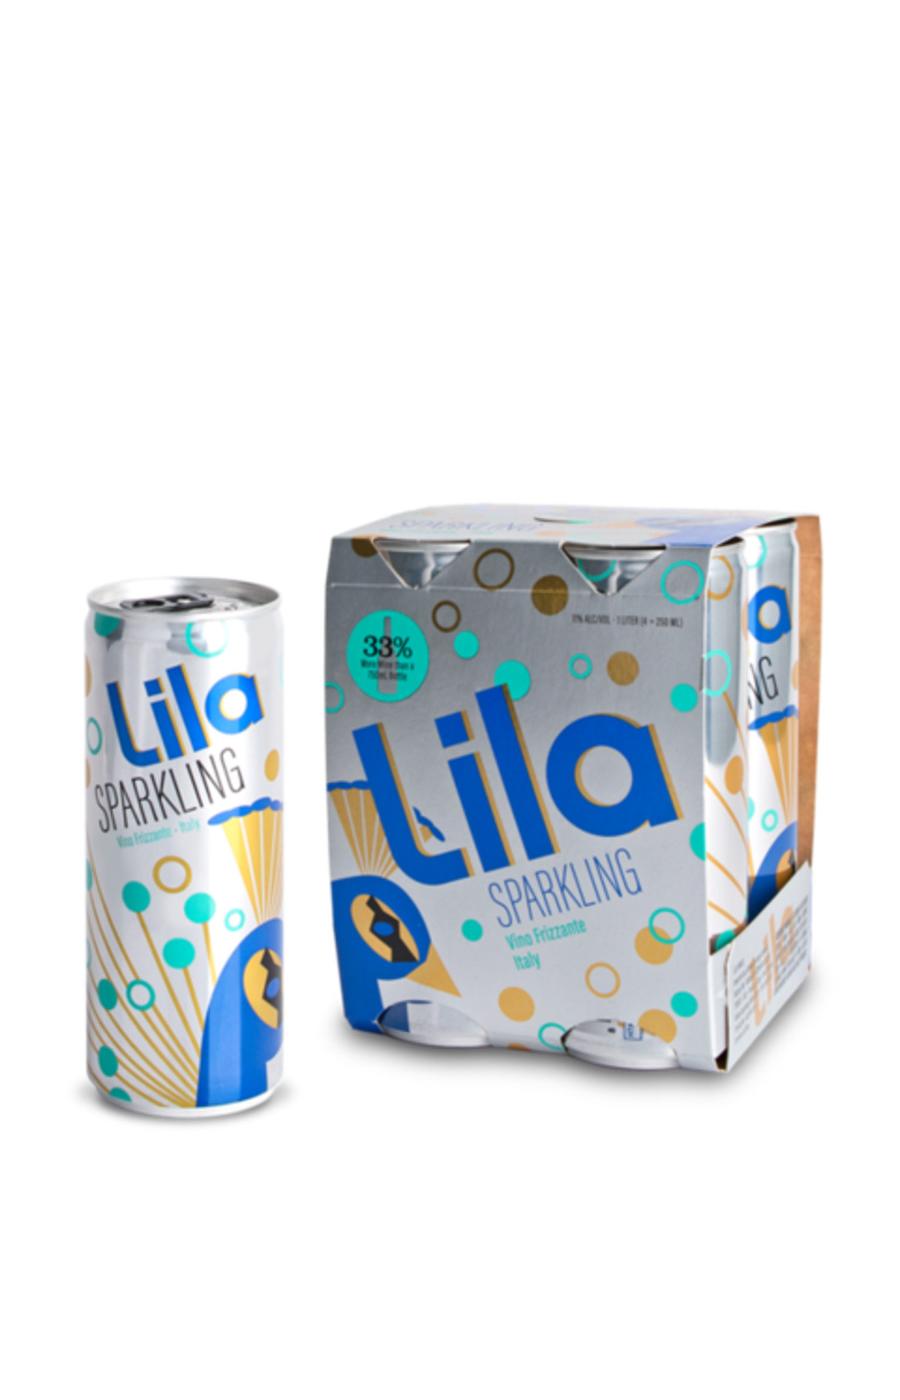 Lila Sparkling Vino Frizzante 250 mL Cans; image 2 of 2